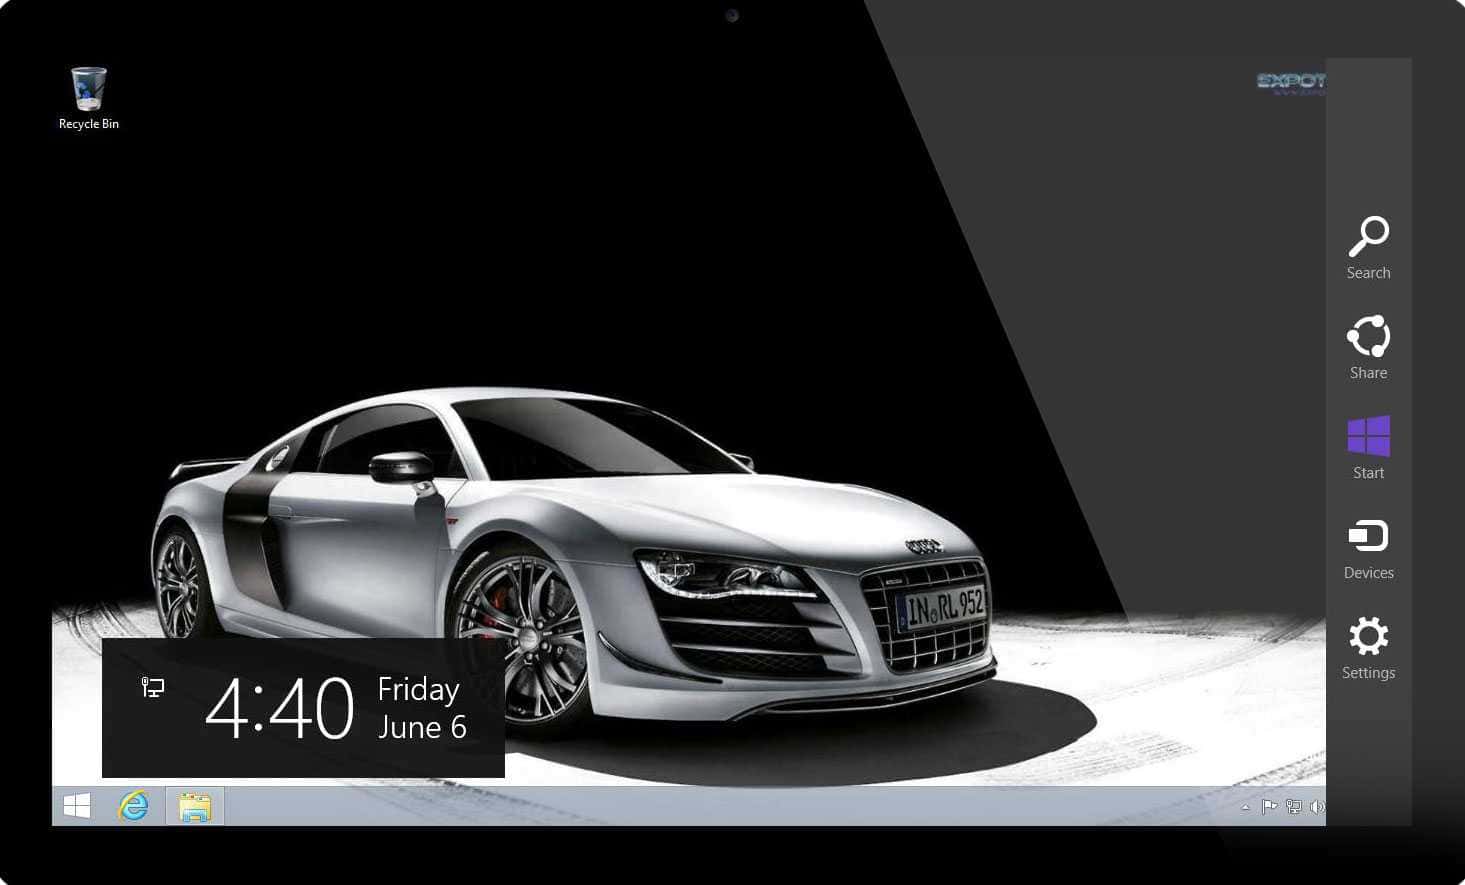 Audi Cars Theme - Luxury Sports Cars 2012 - HD Wallpaper 